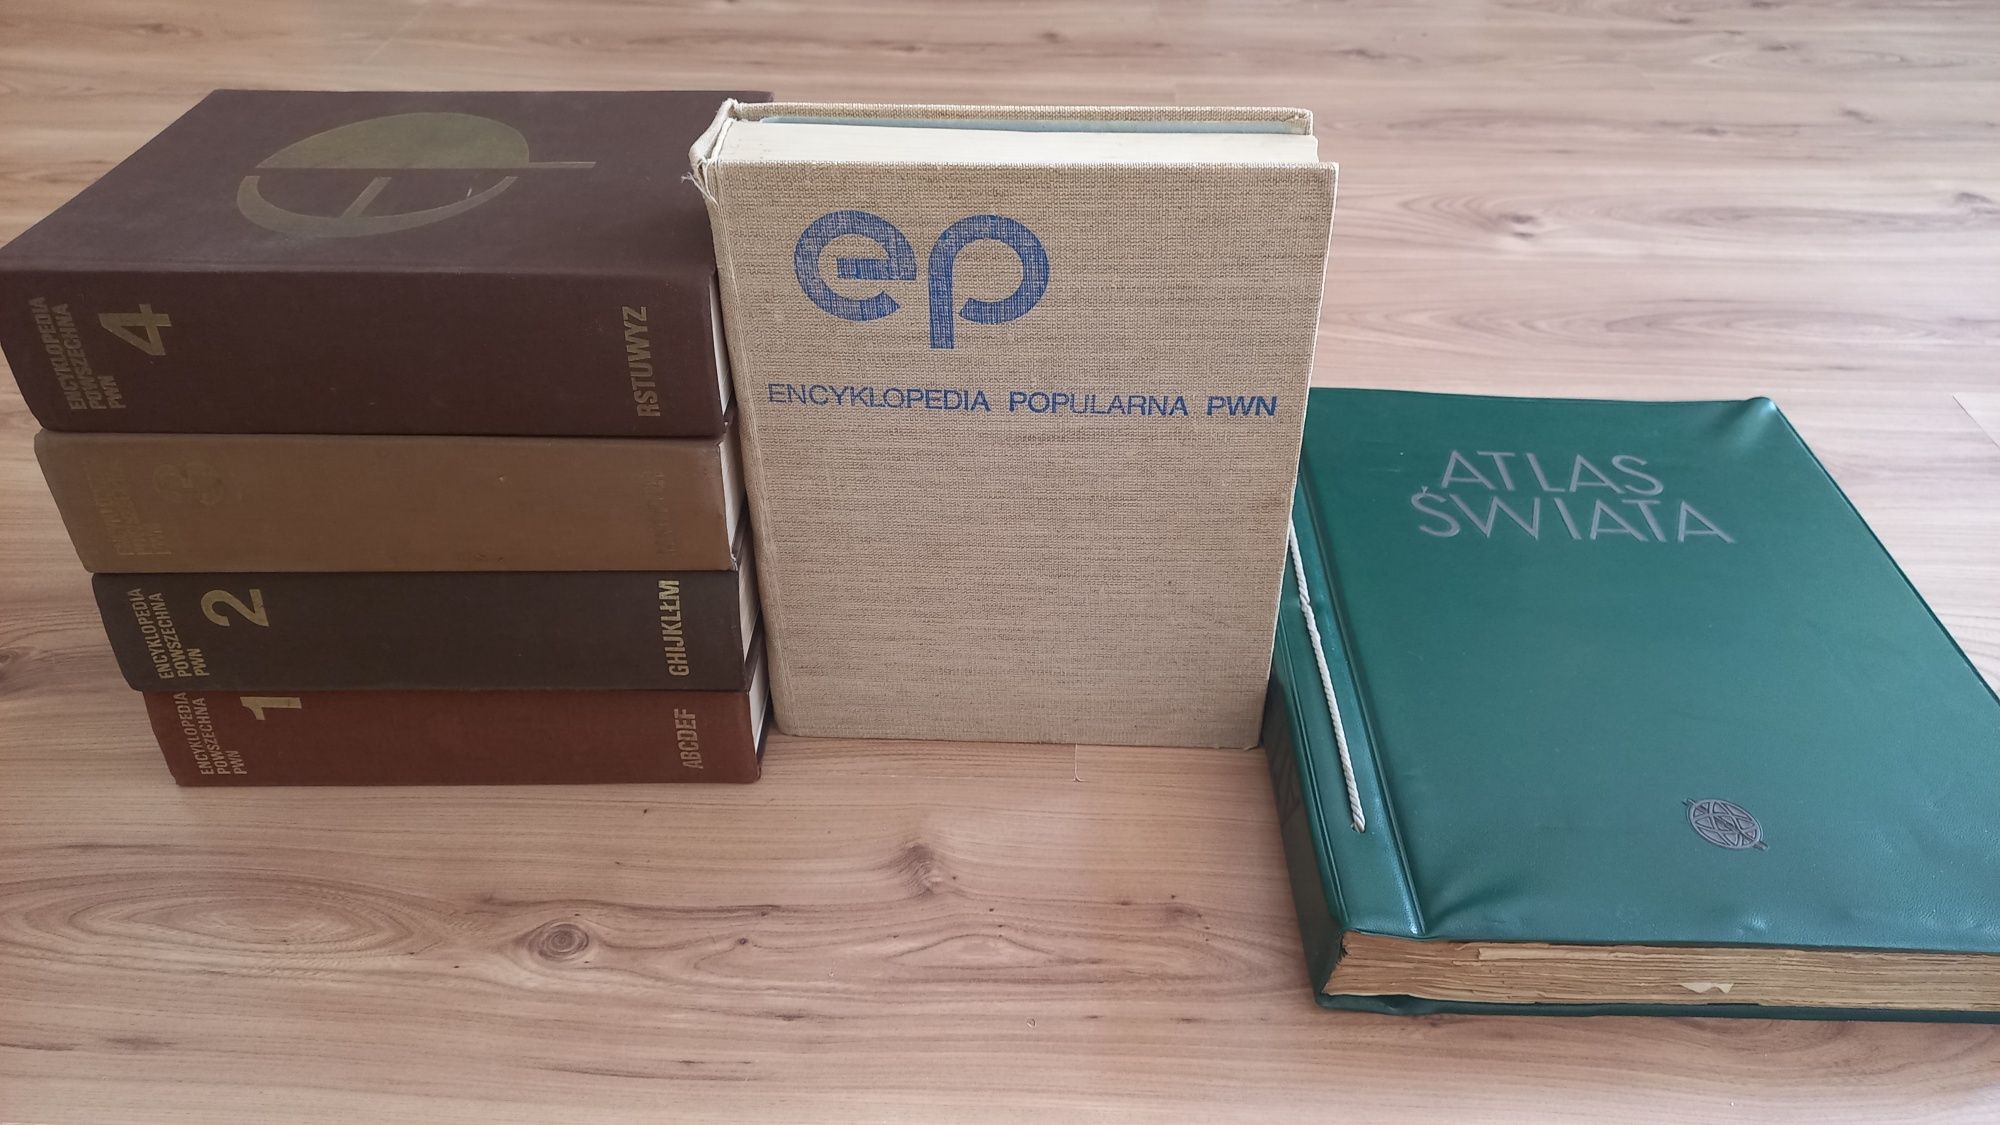 Encyklopedie oraz Atlas świata